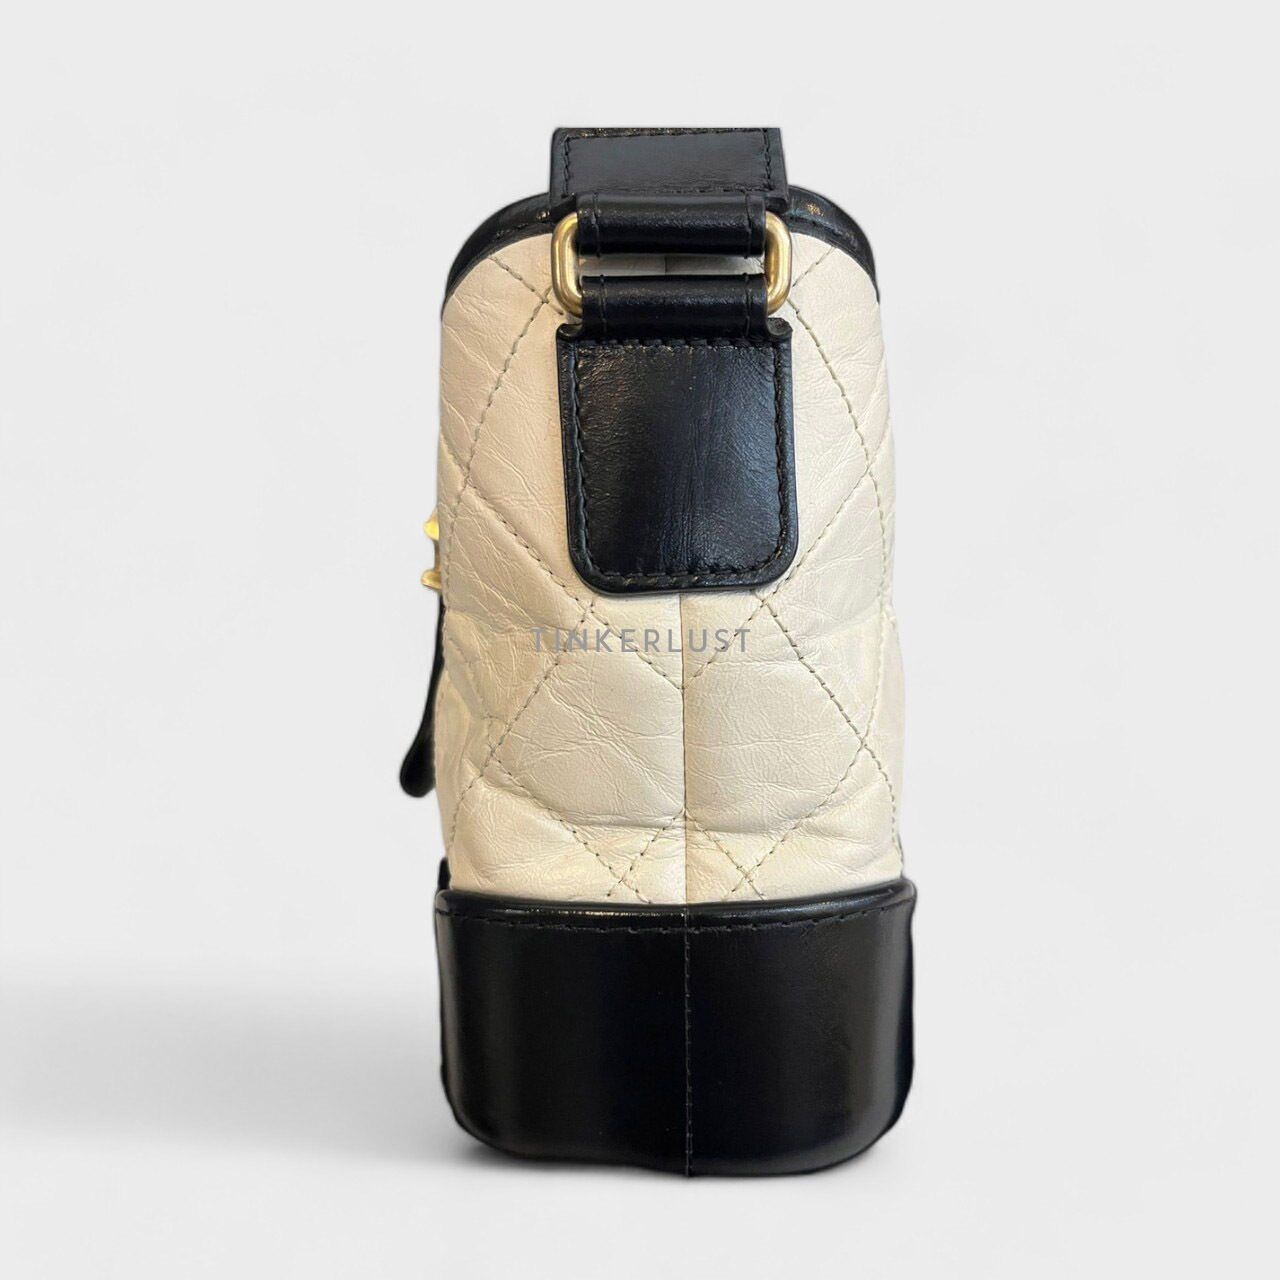 Chanel Gabrielle Small Black & White Calfskin #25 Shoulder Bag